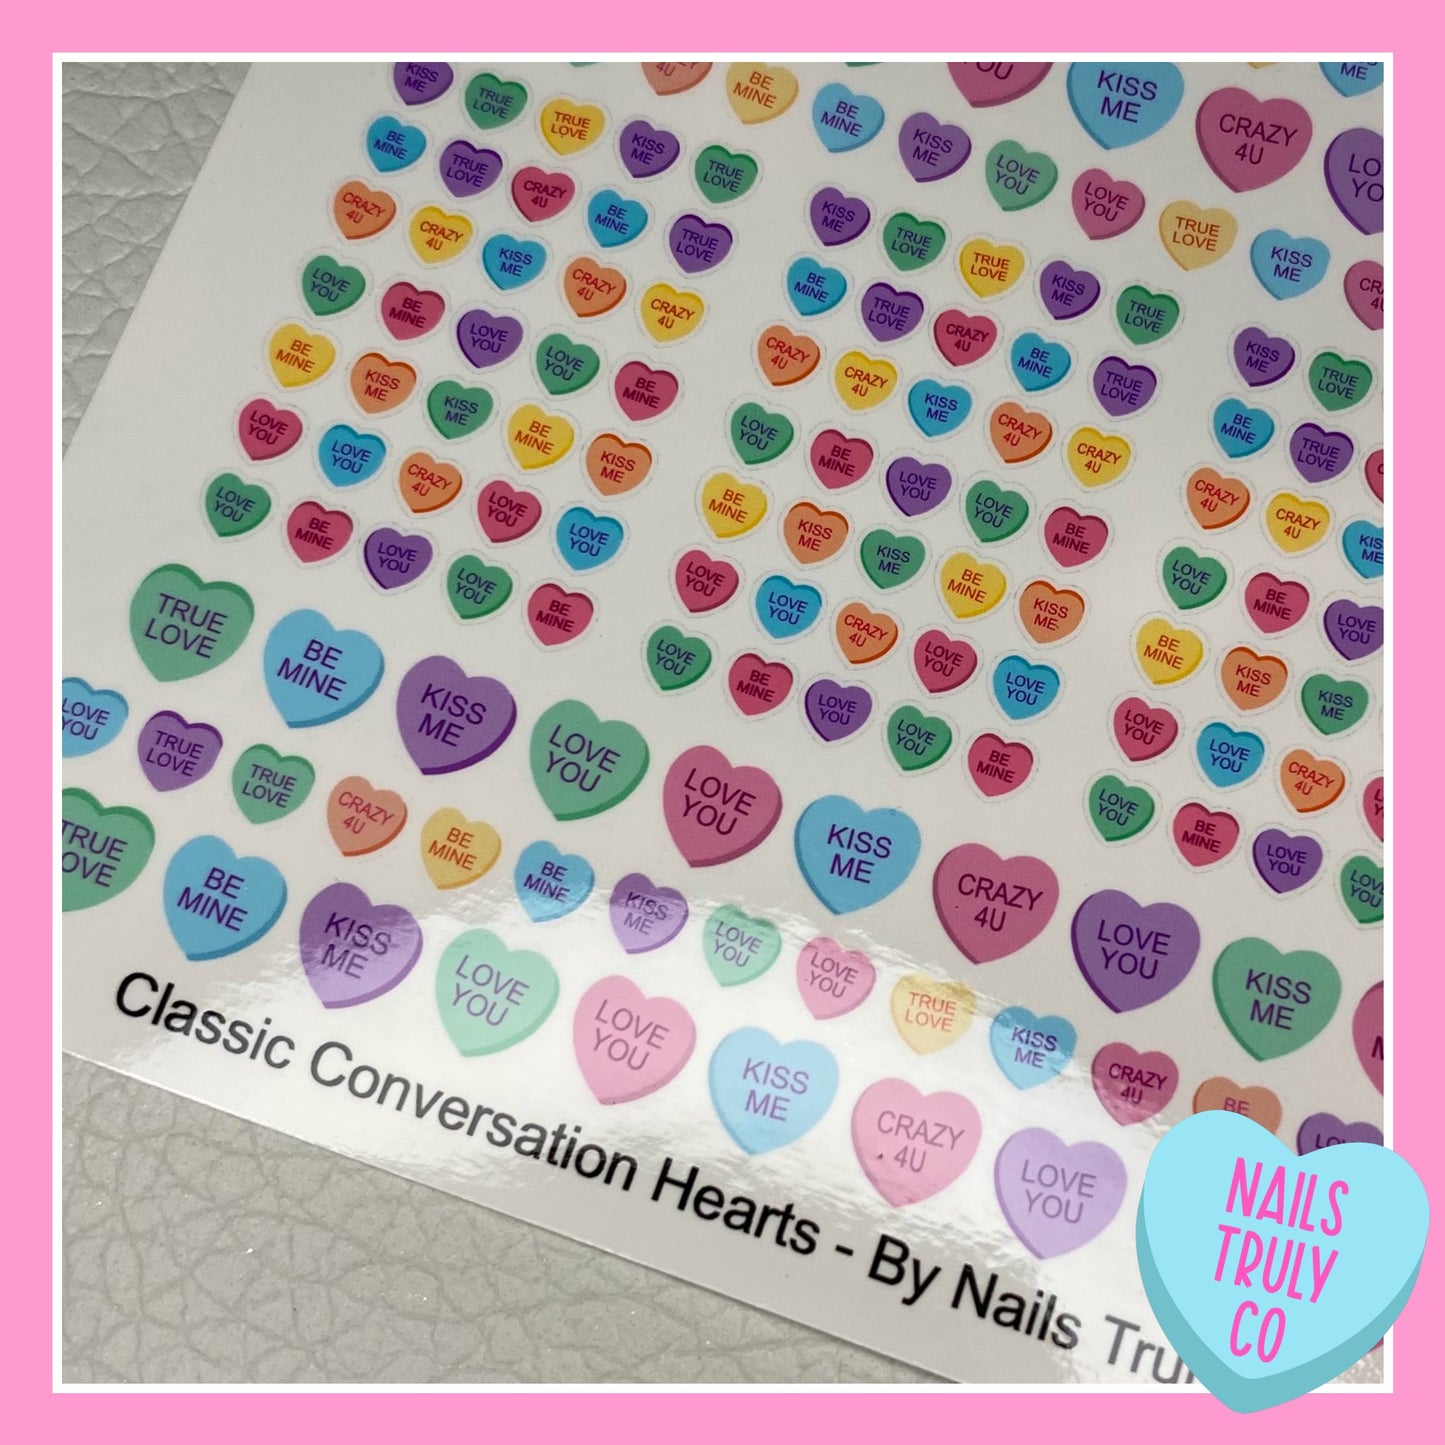 Conversation Hearts- Classic Conversation Hearts